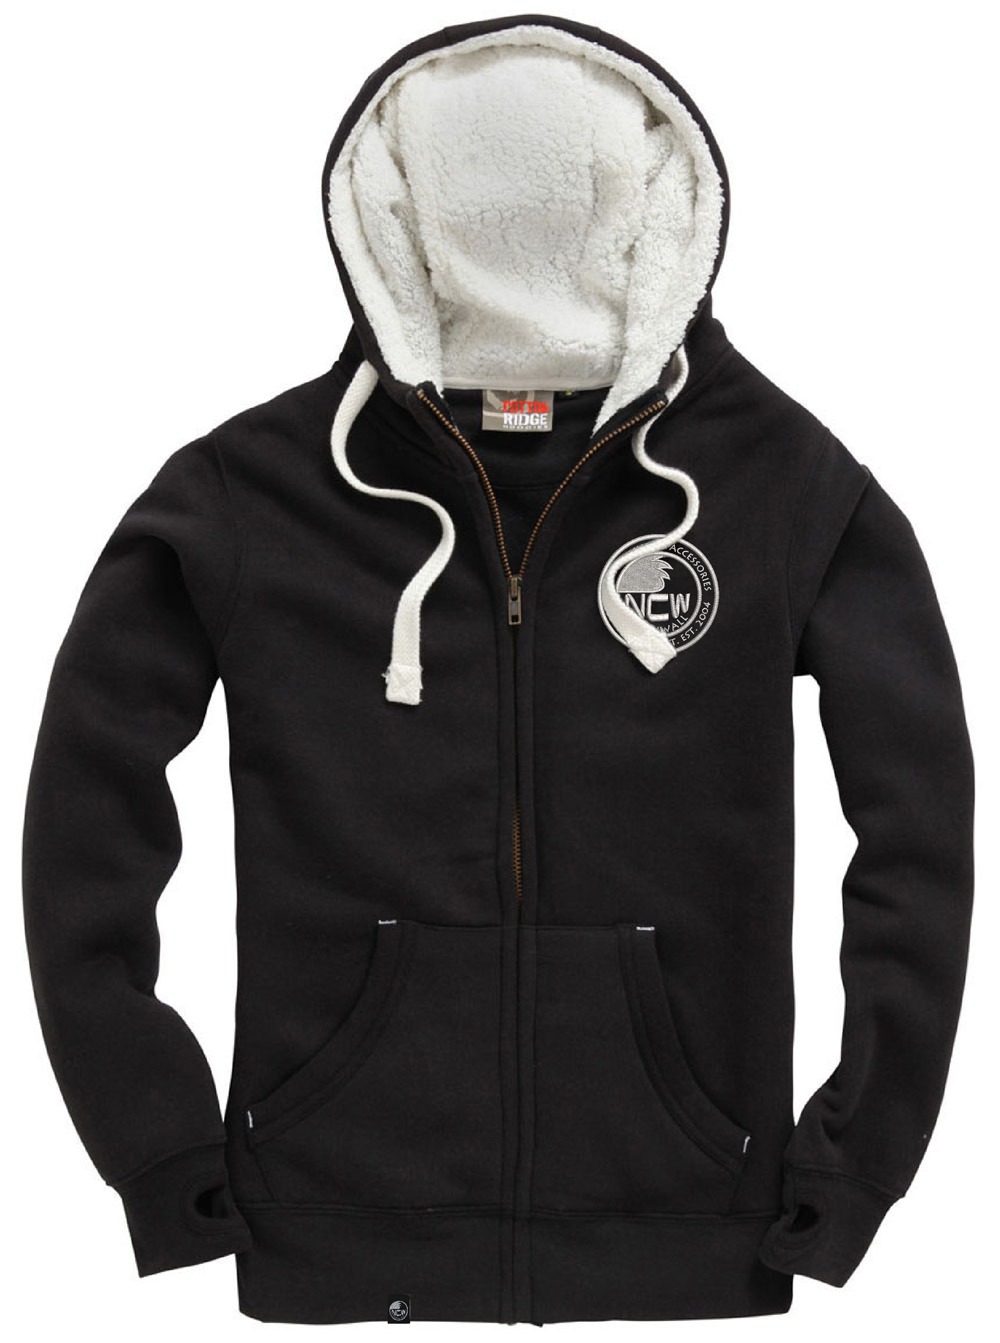 NCW Sherpa fleece lined hoodie (Dusty Black, French Navy & Maroon)